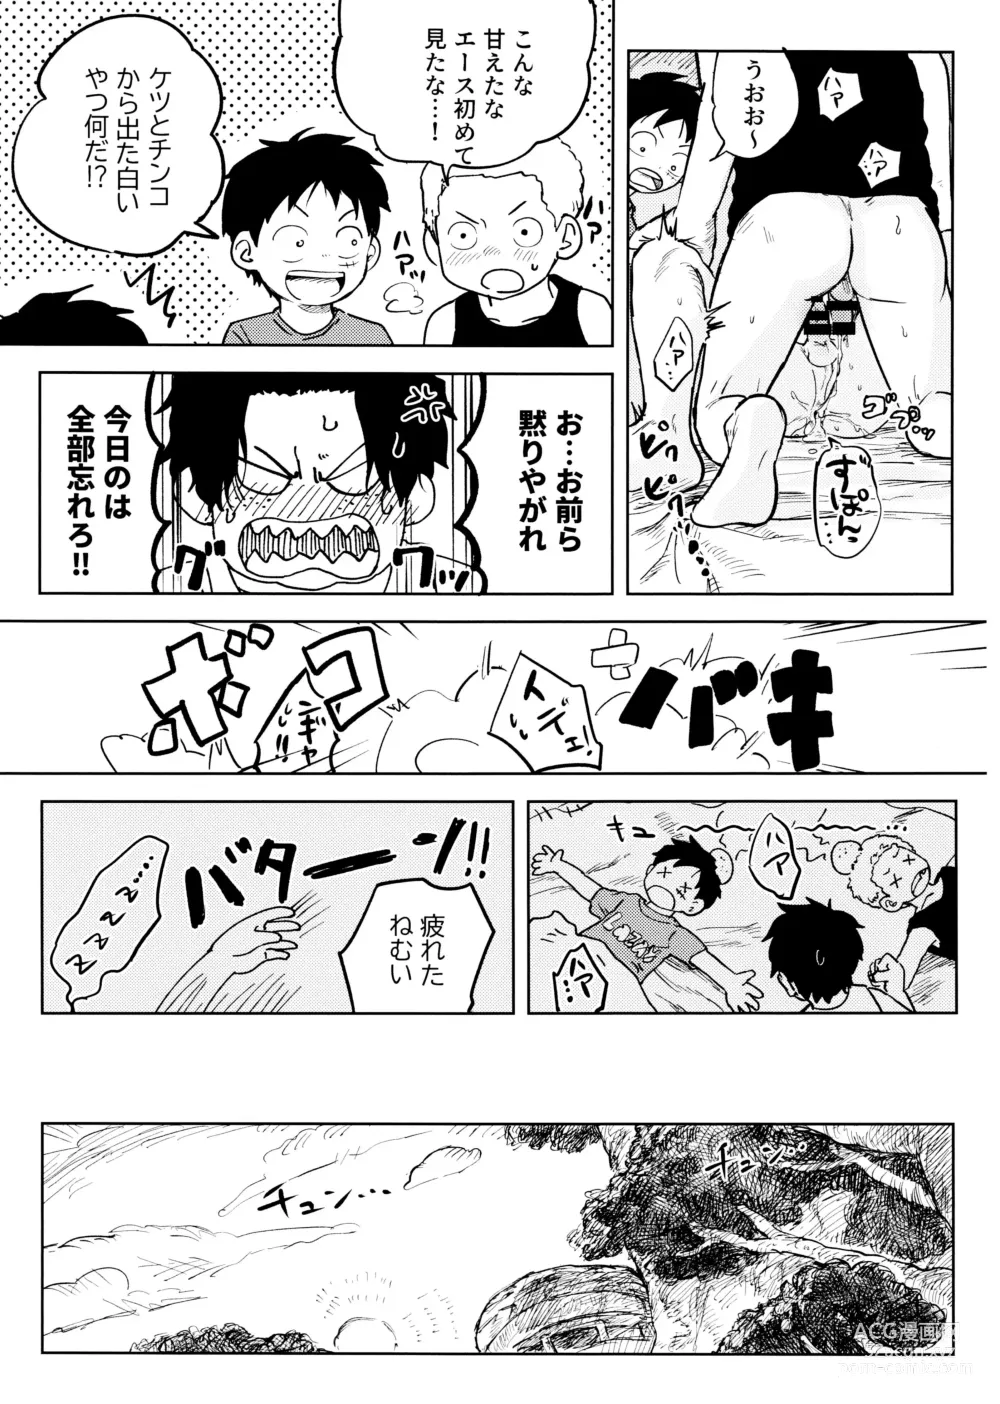 Page 74 of doujinshi Himitsu no Colubo Yama